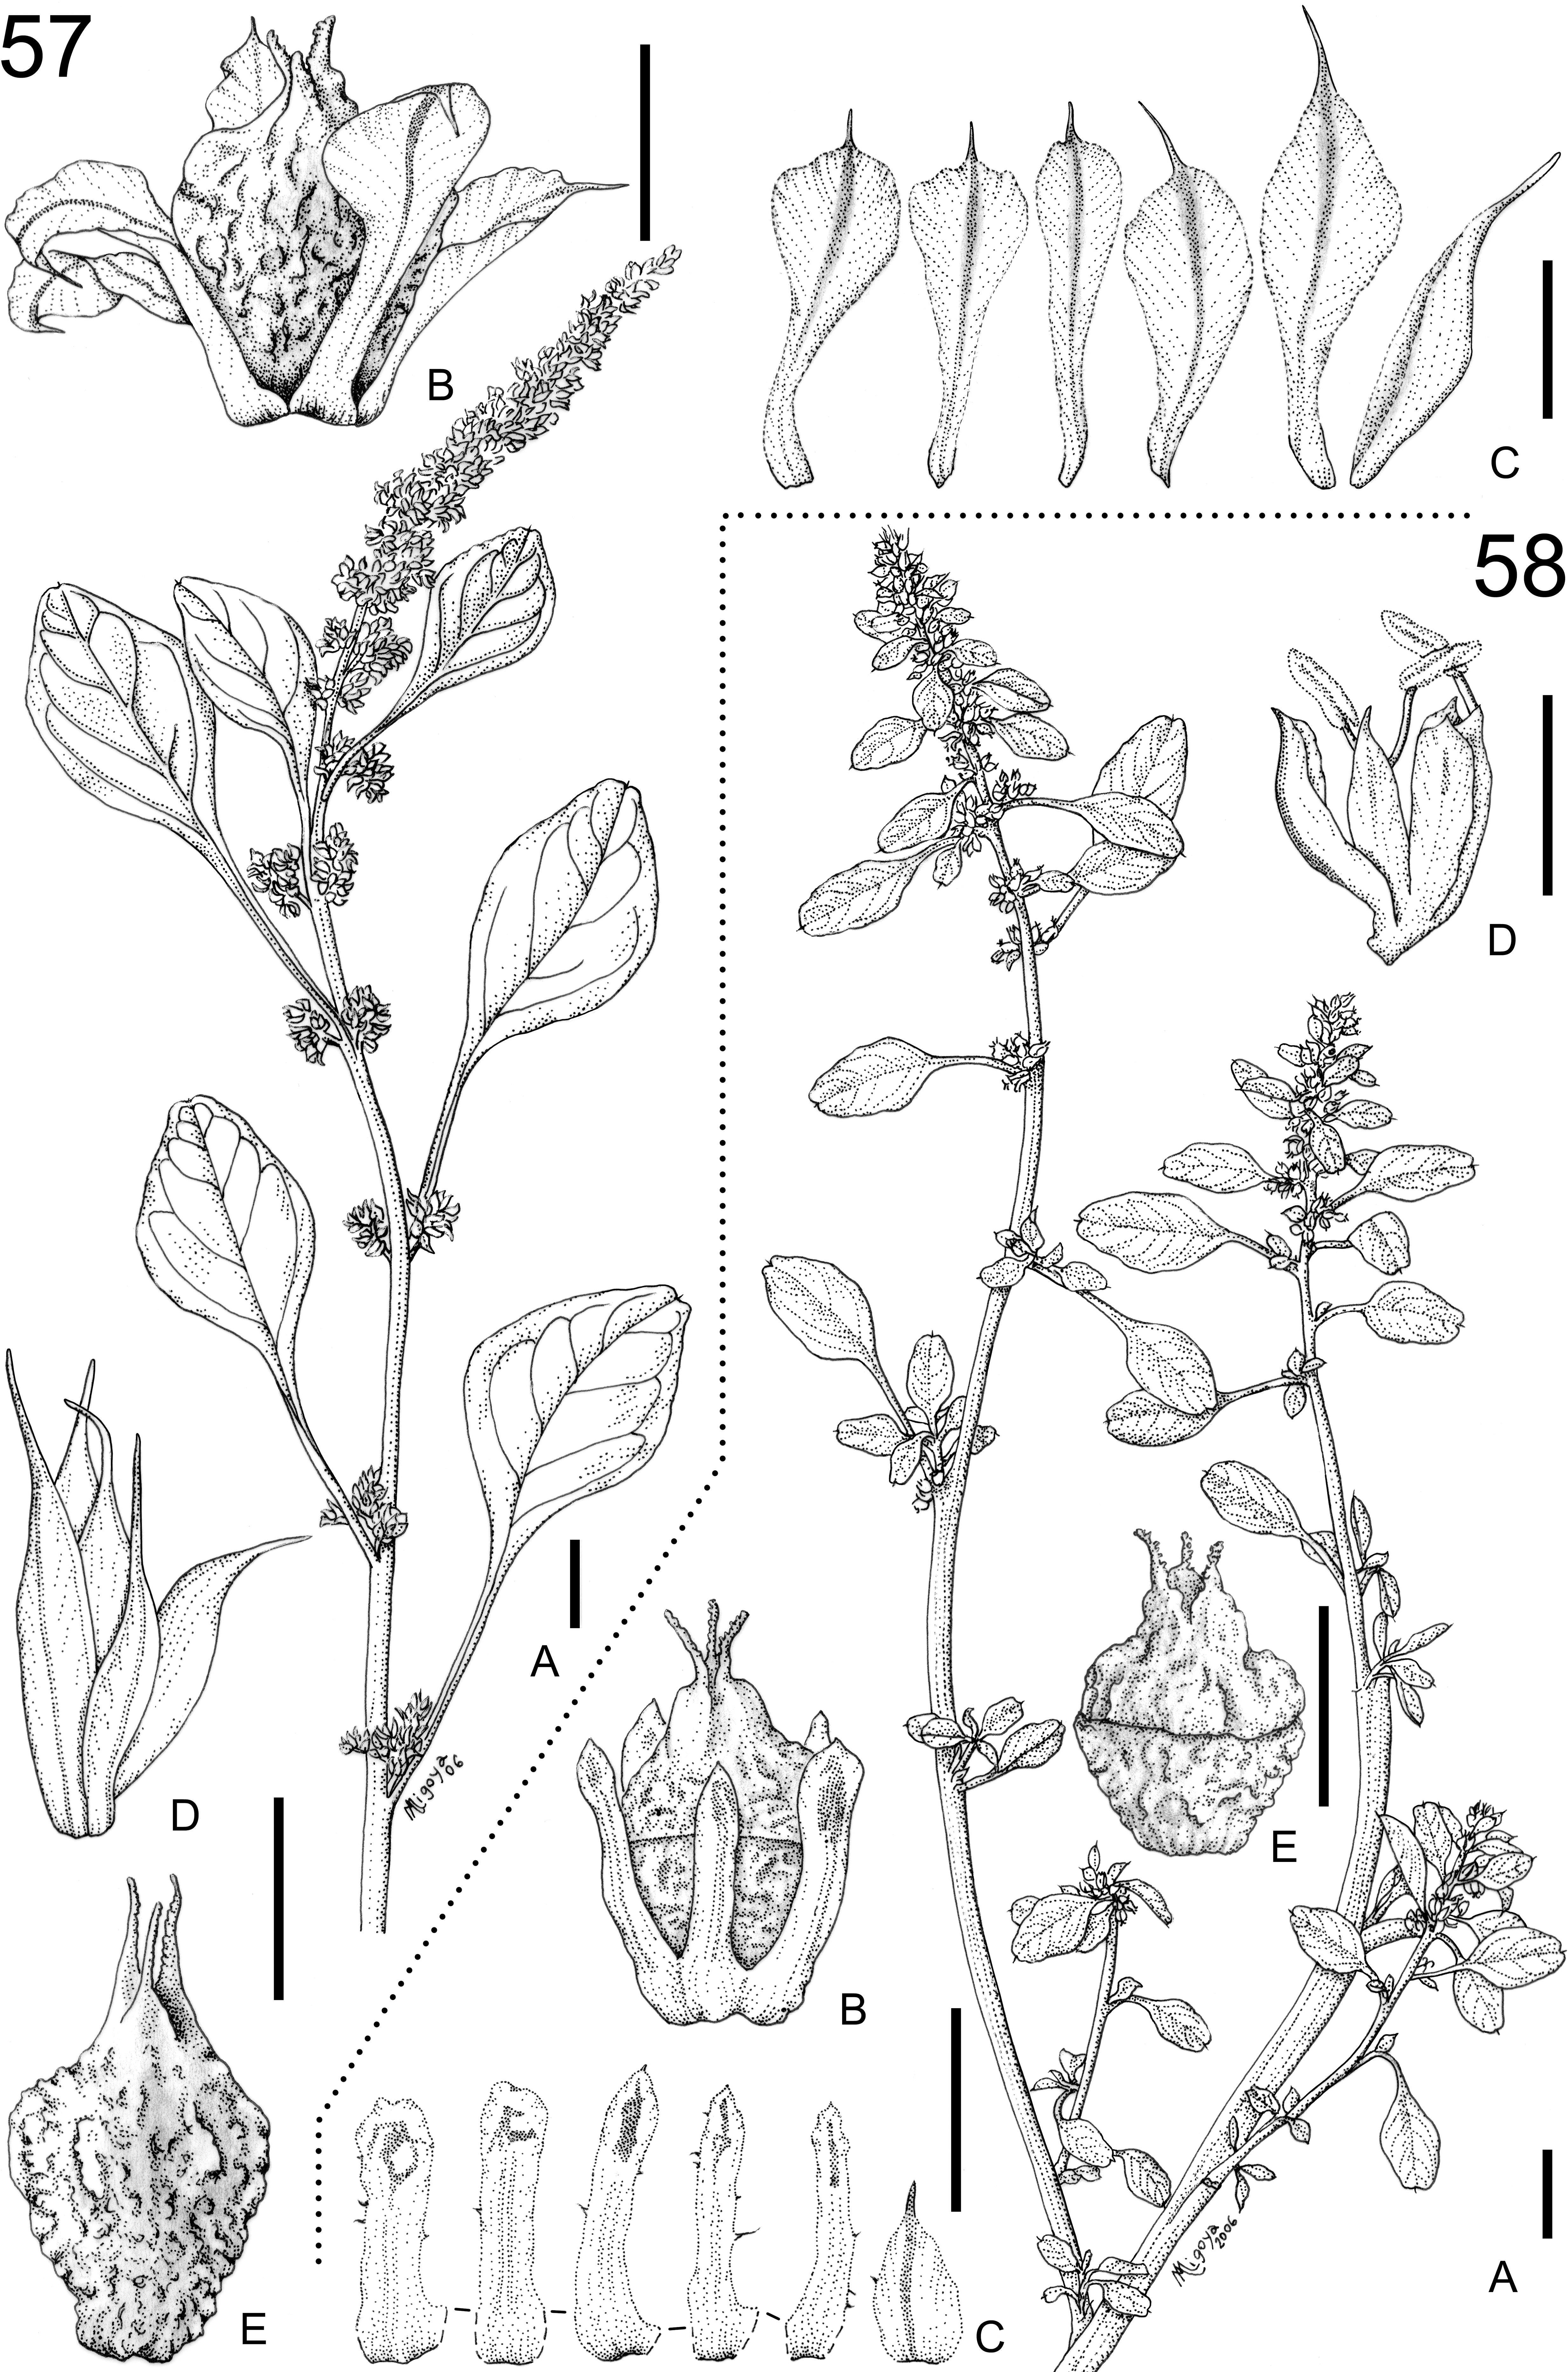 Revision Taxonomica De Las Especies Monoicas De Amaranthus